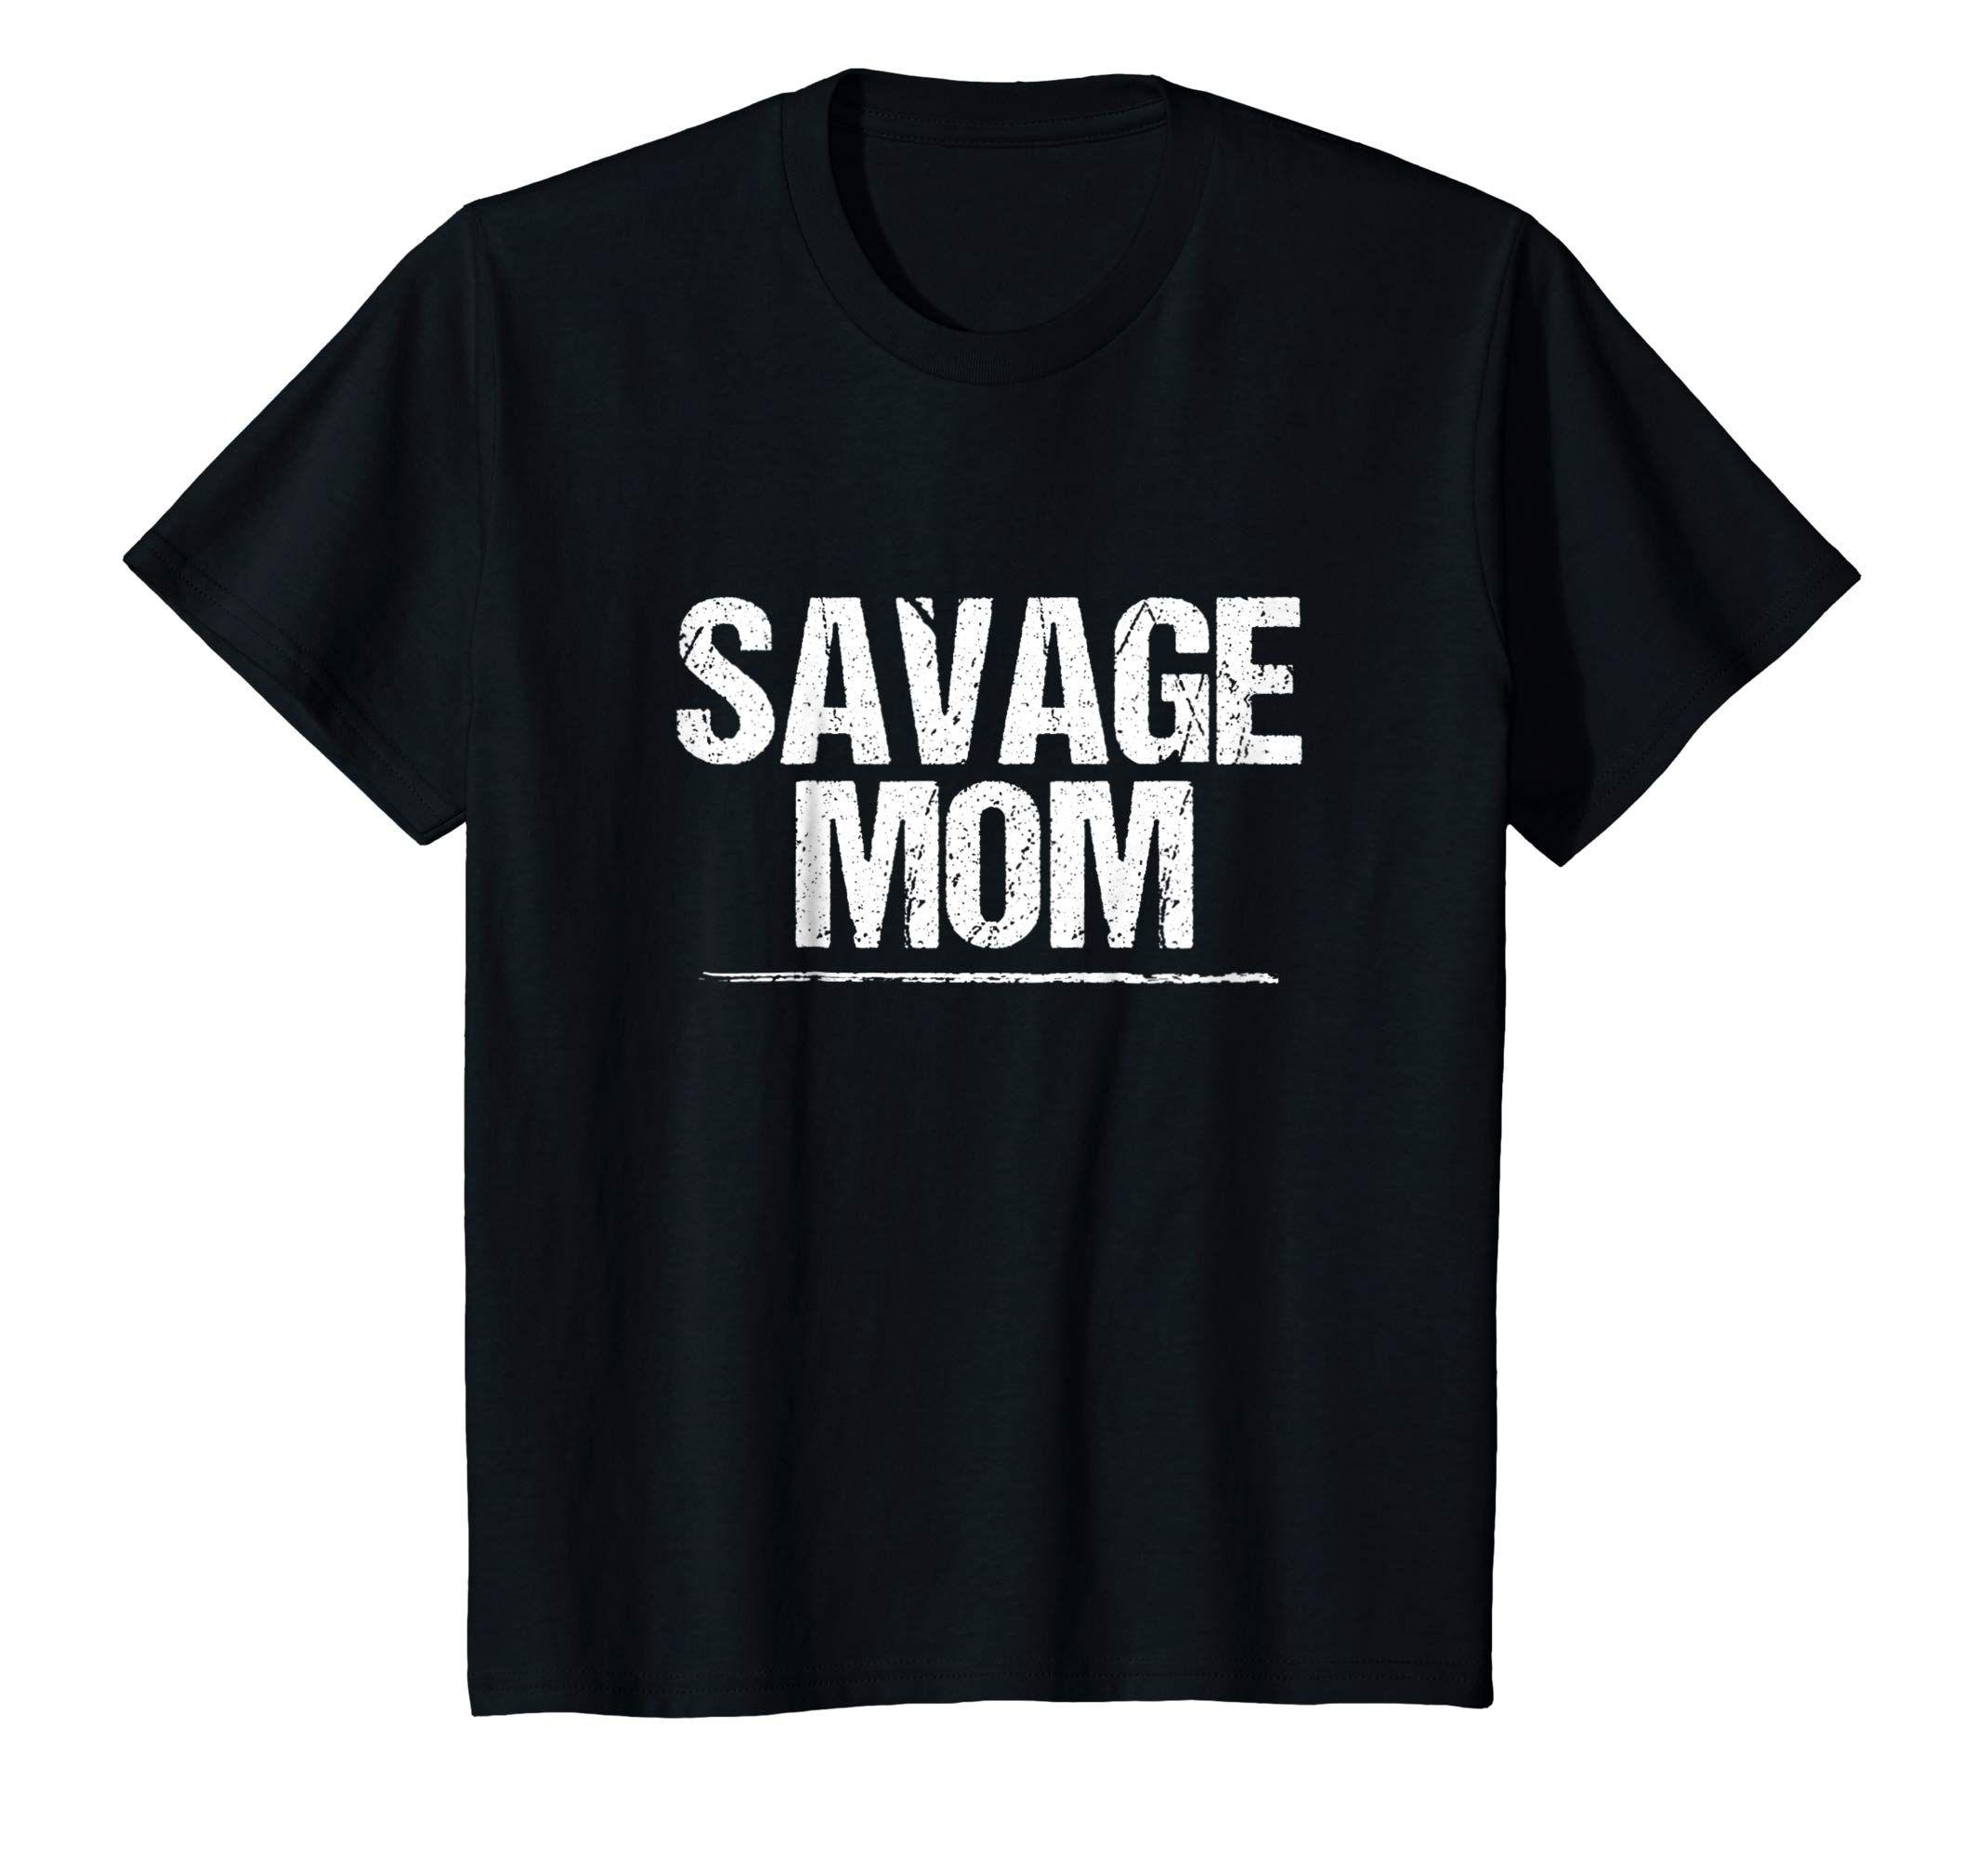 Crazzy Savage Logo - Savage Mom T Shirt Sarcastic Apparel Crazy Lady Wear